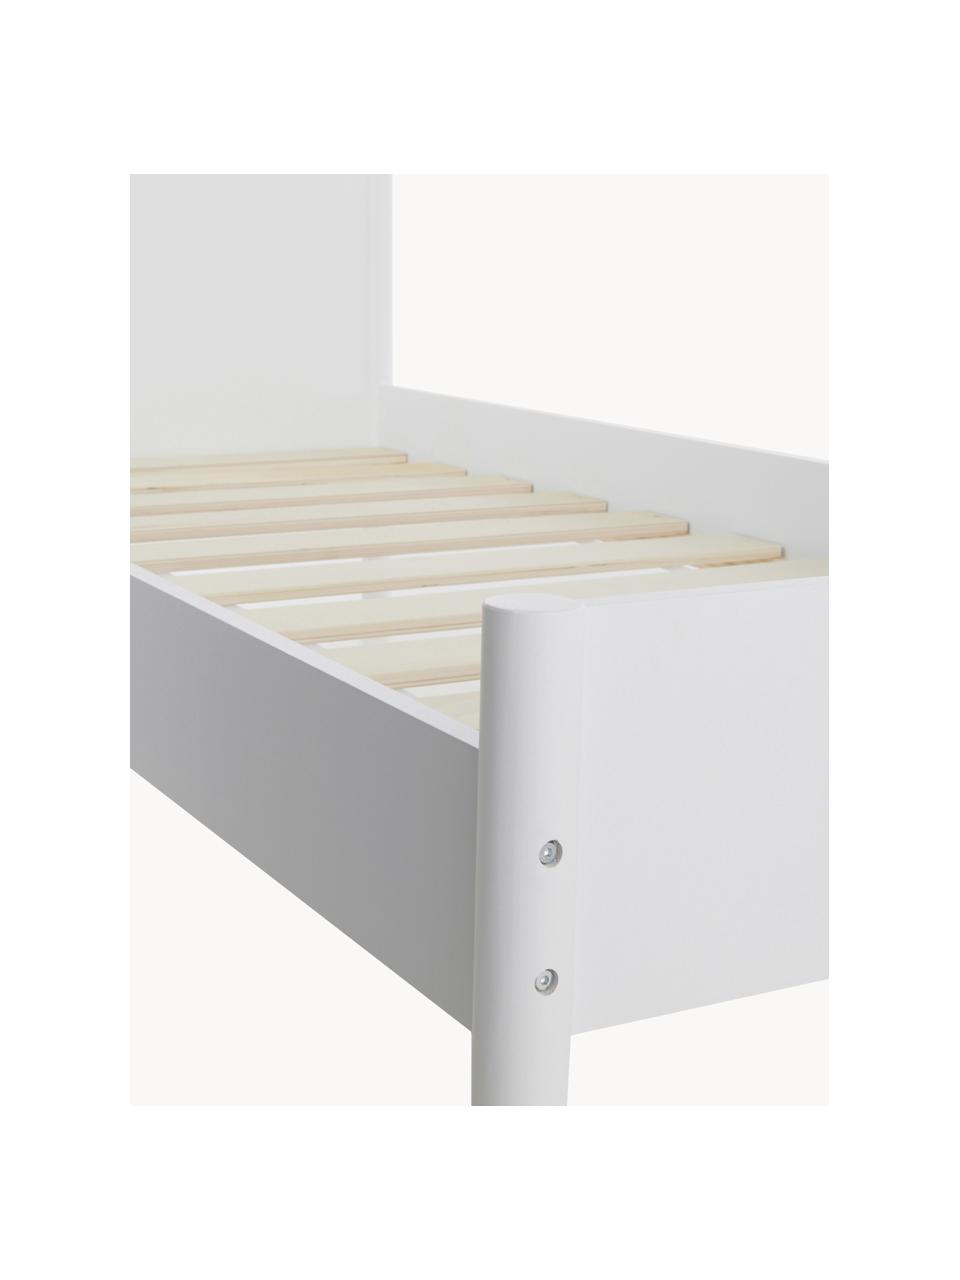 Diván cama infantil de madera 70X160 cm